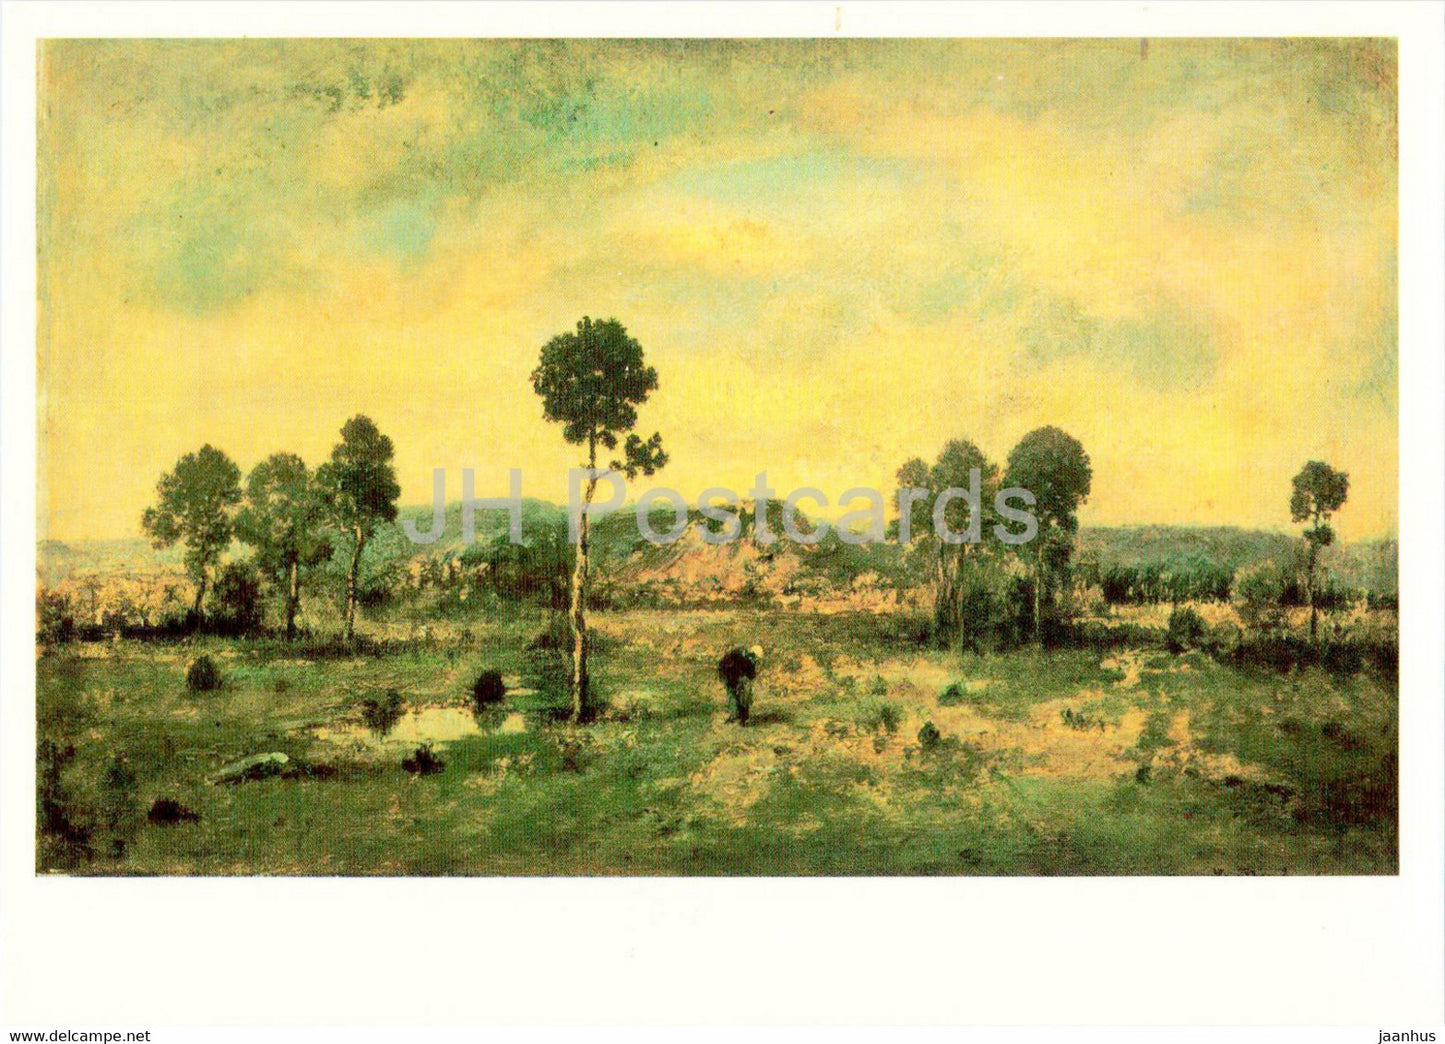 painting by Narcisse Virgile Diaz de la Pena - Landscape with Pine tree - French art - 1983 - Russia USSR - unused - JH Postcards